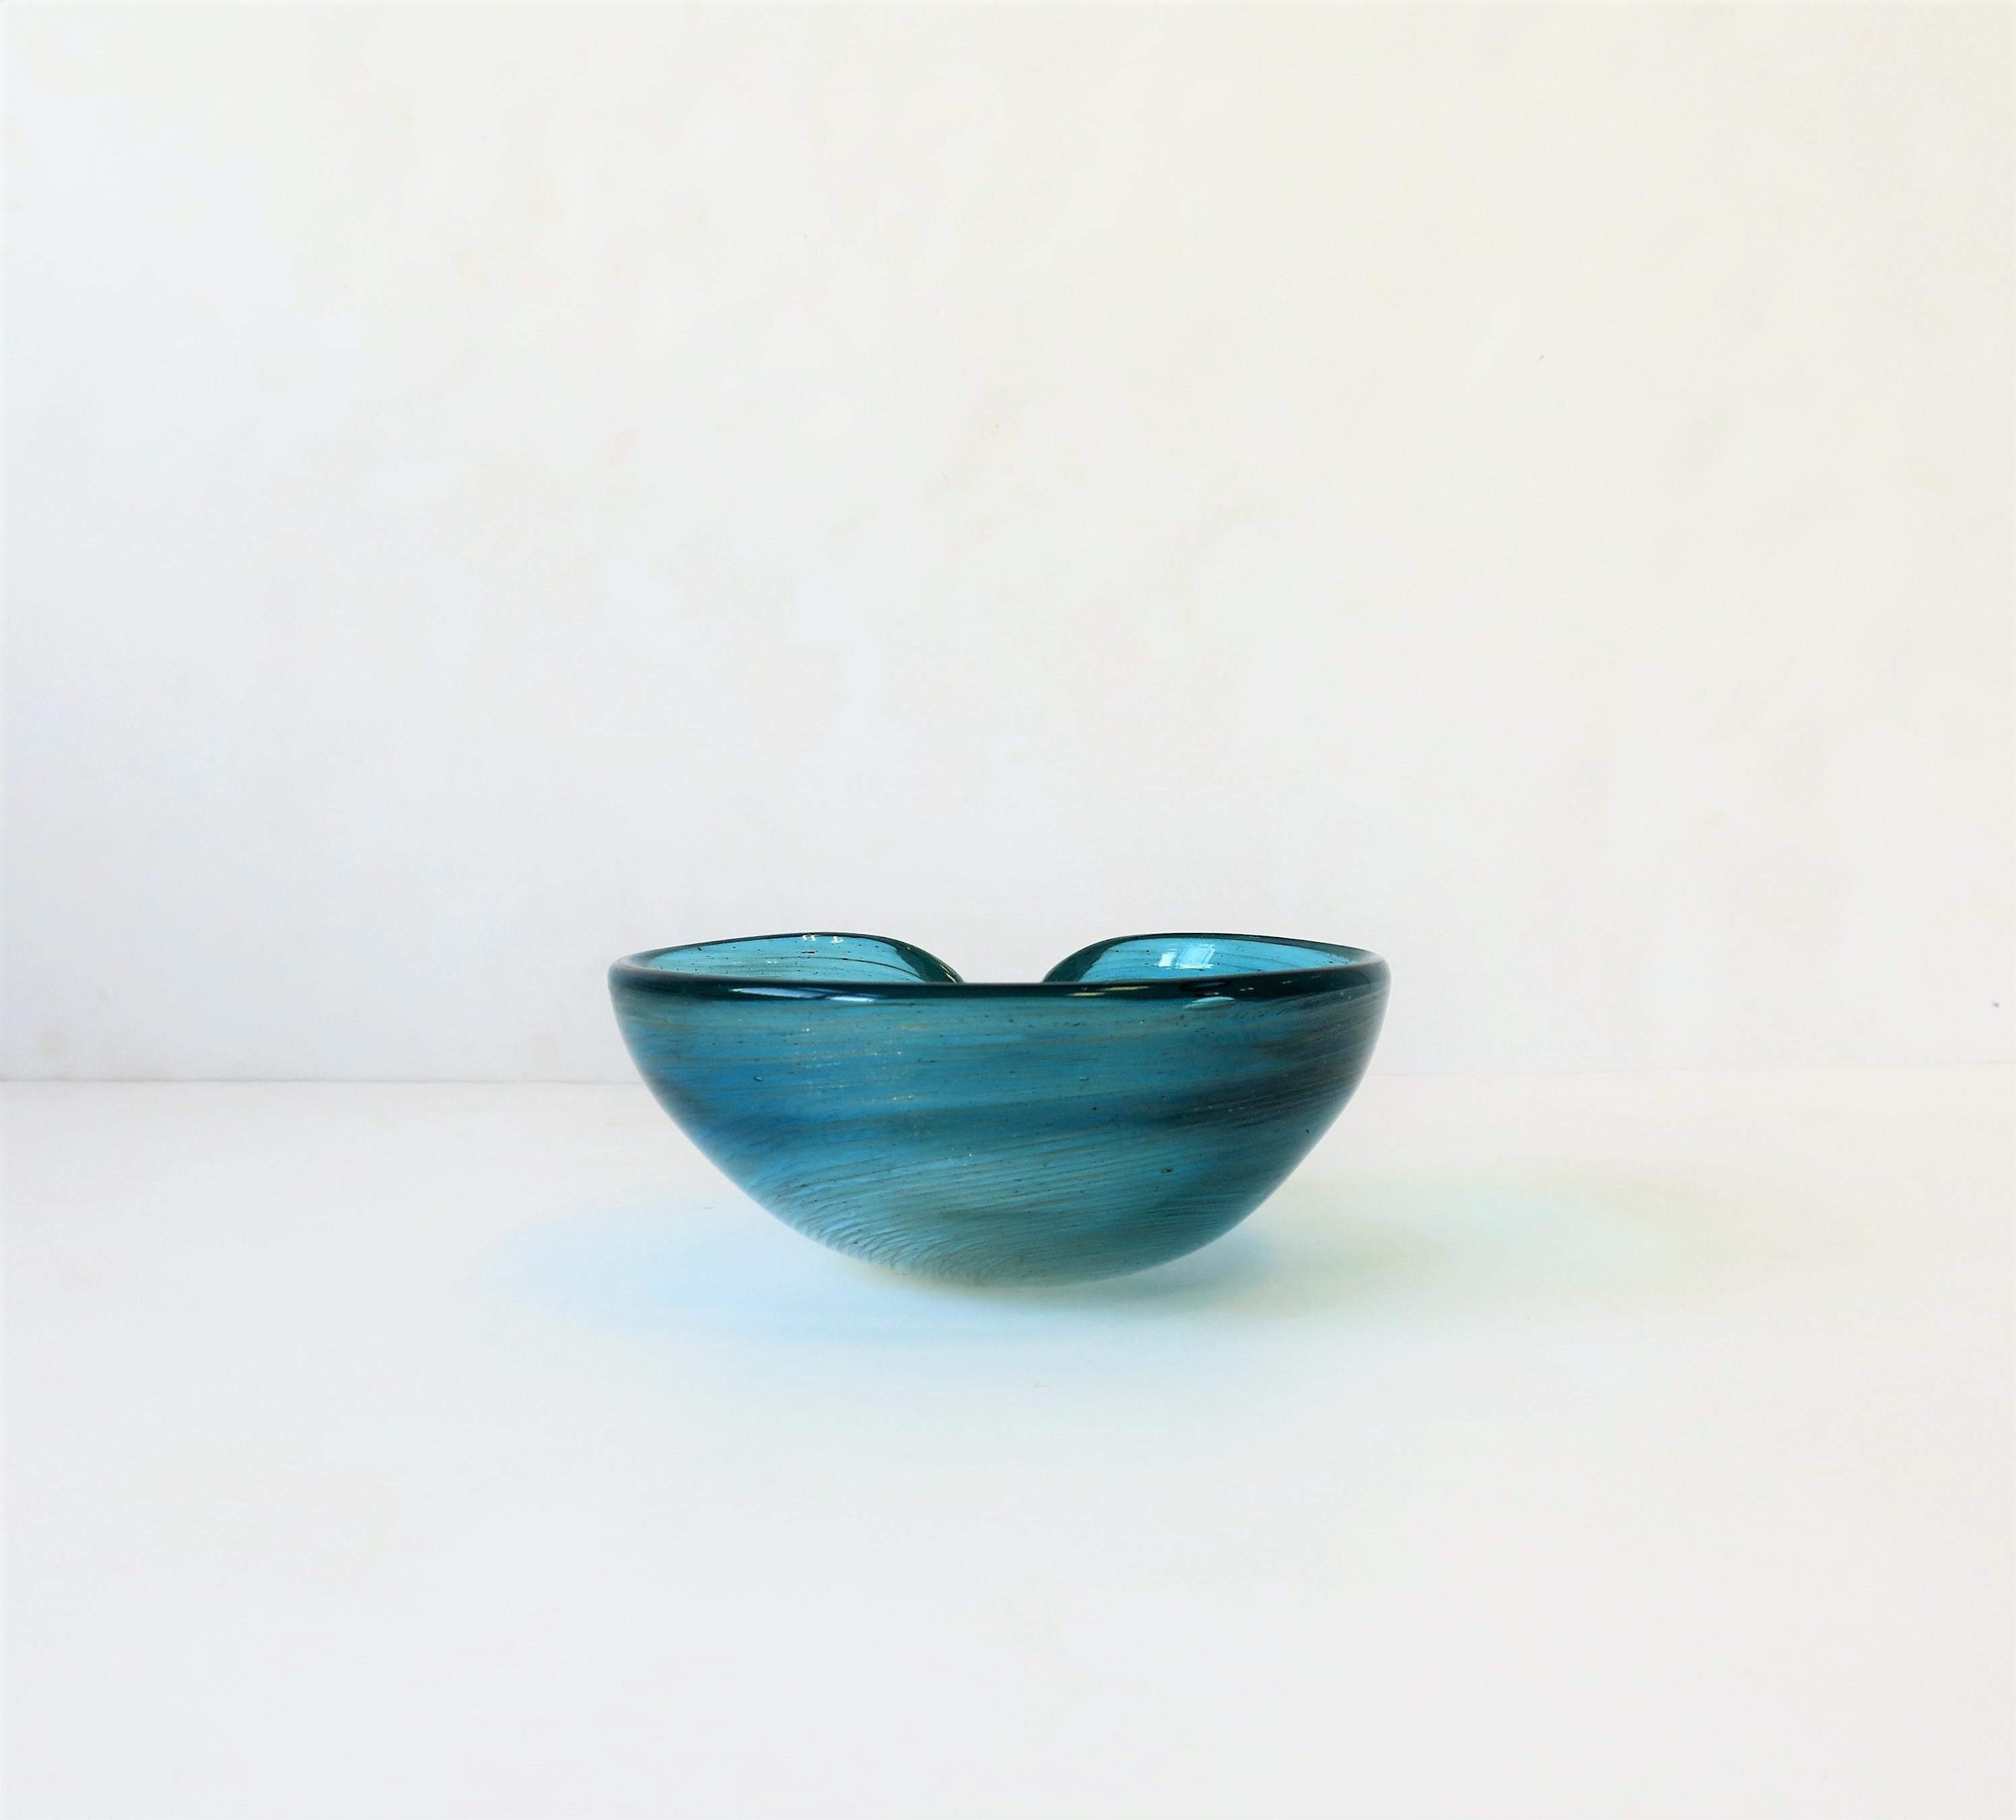 teal glass bowls